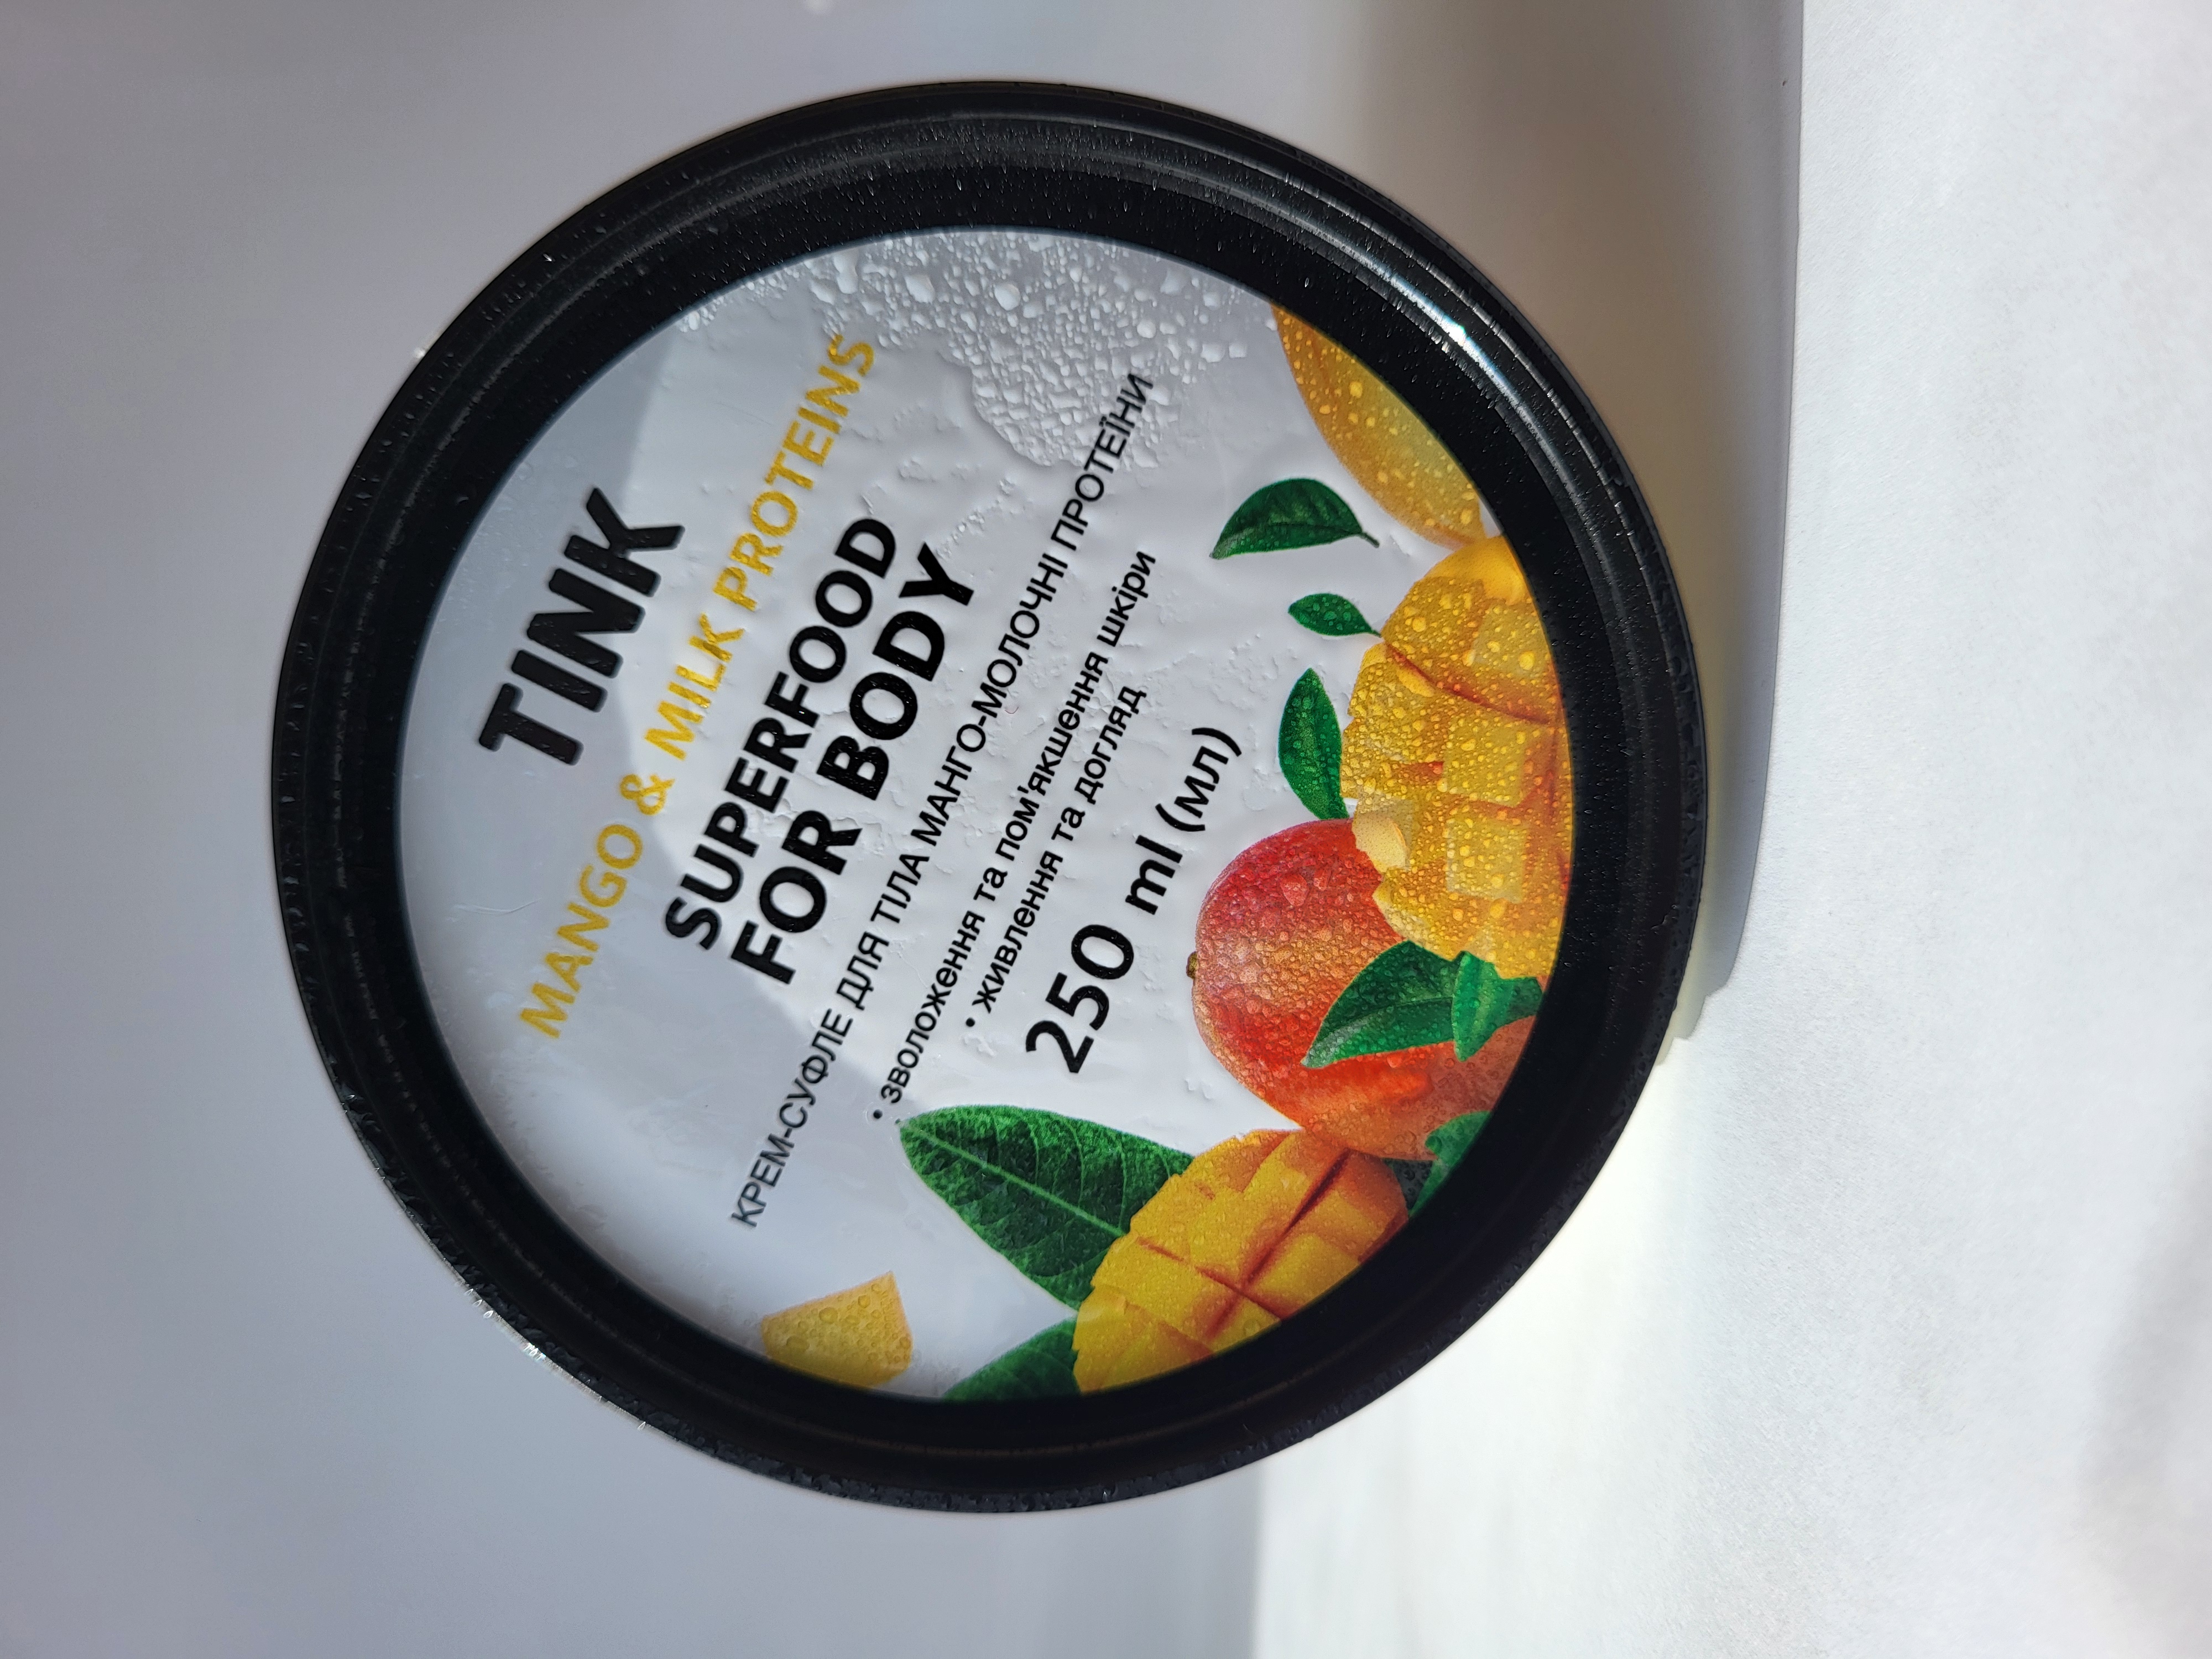 Крем-суфле для тіла Tink "Mango & Milk Proteins"